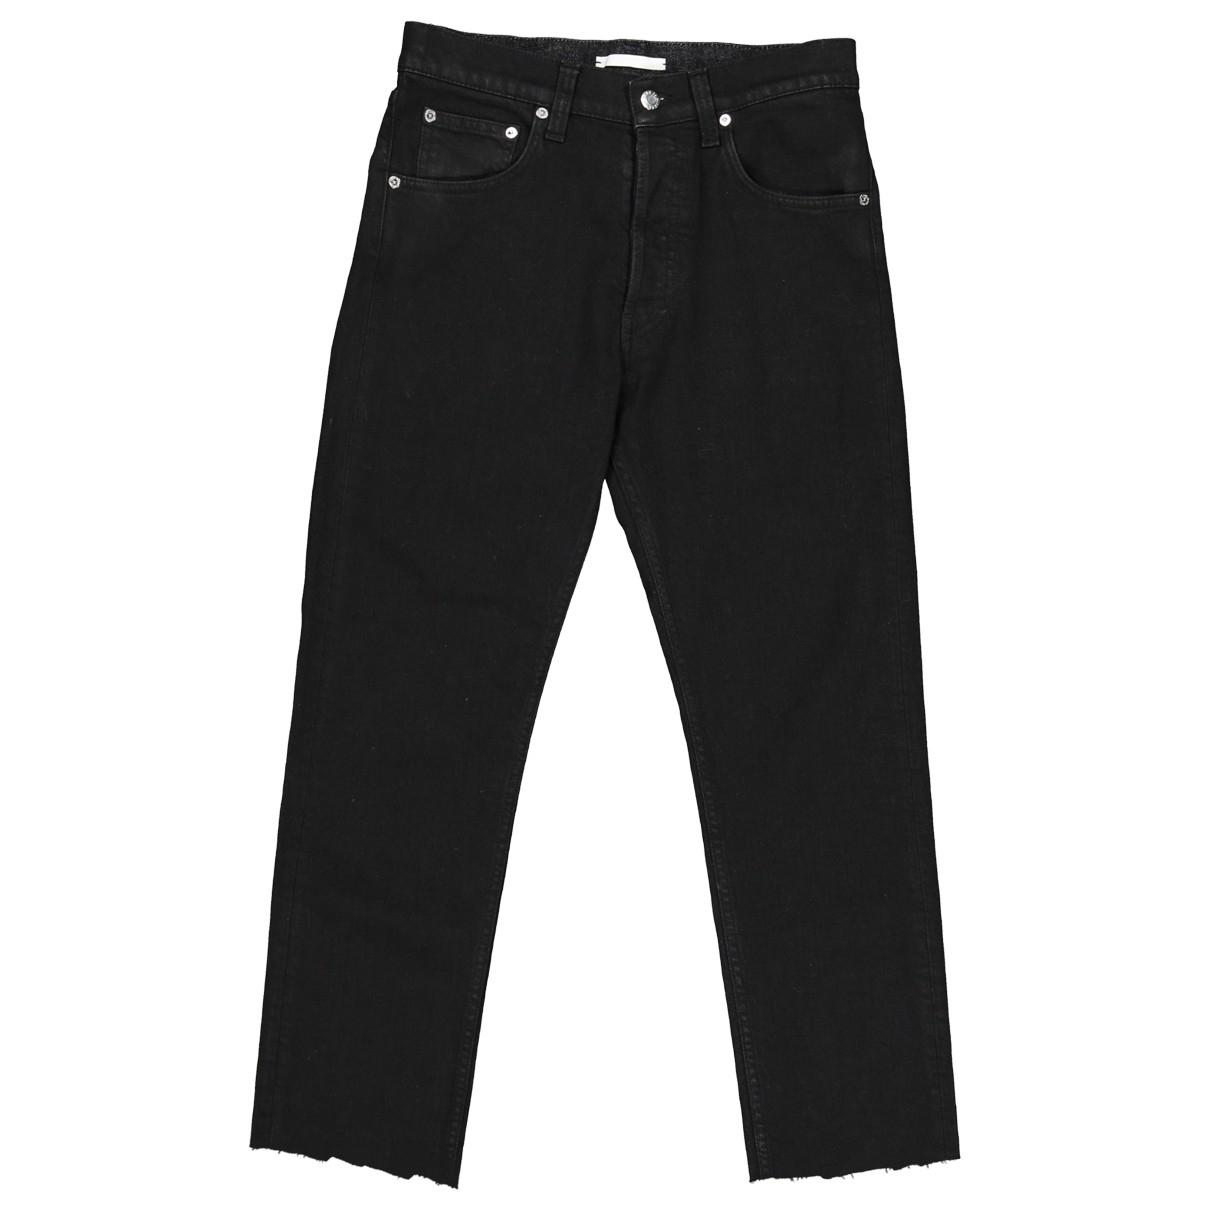 Lyst - Helmut Lang Black Cotton - Elasthane Jeans in Black